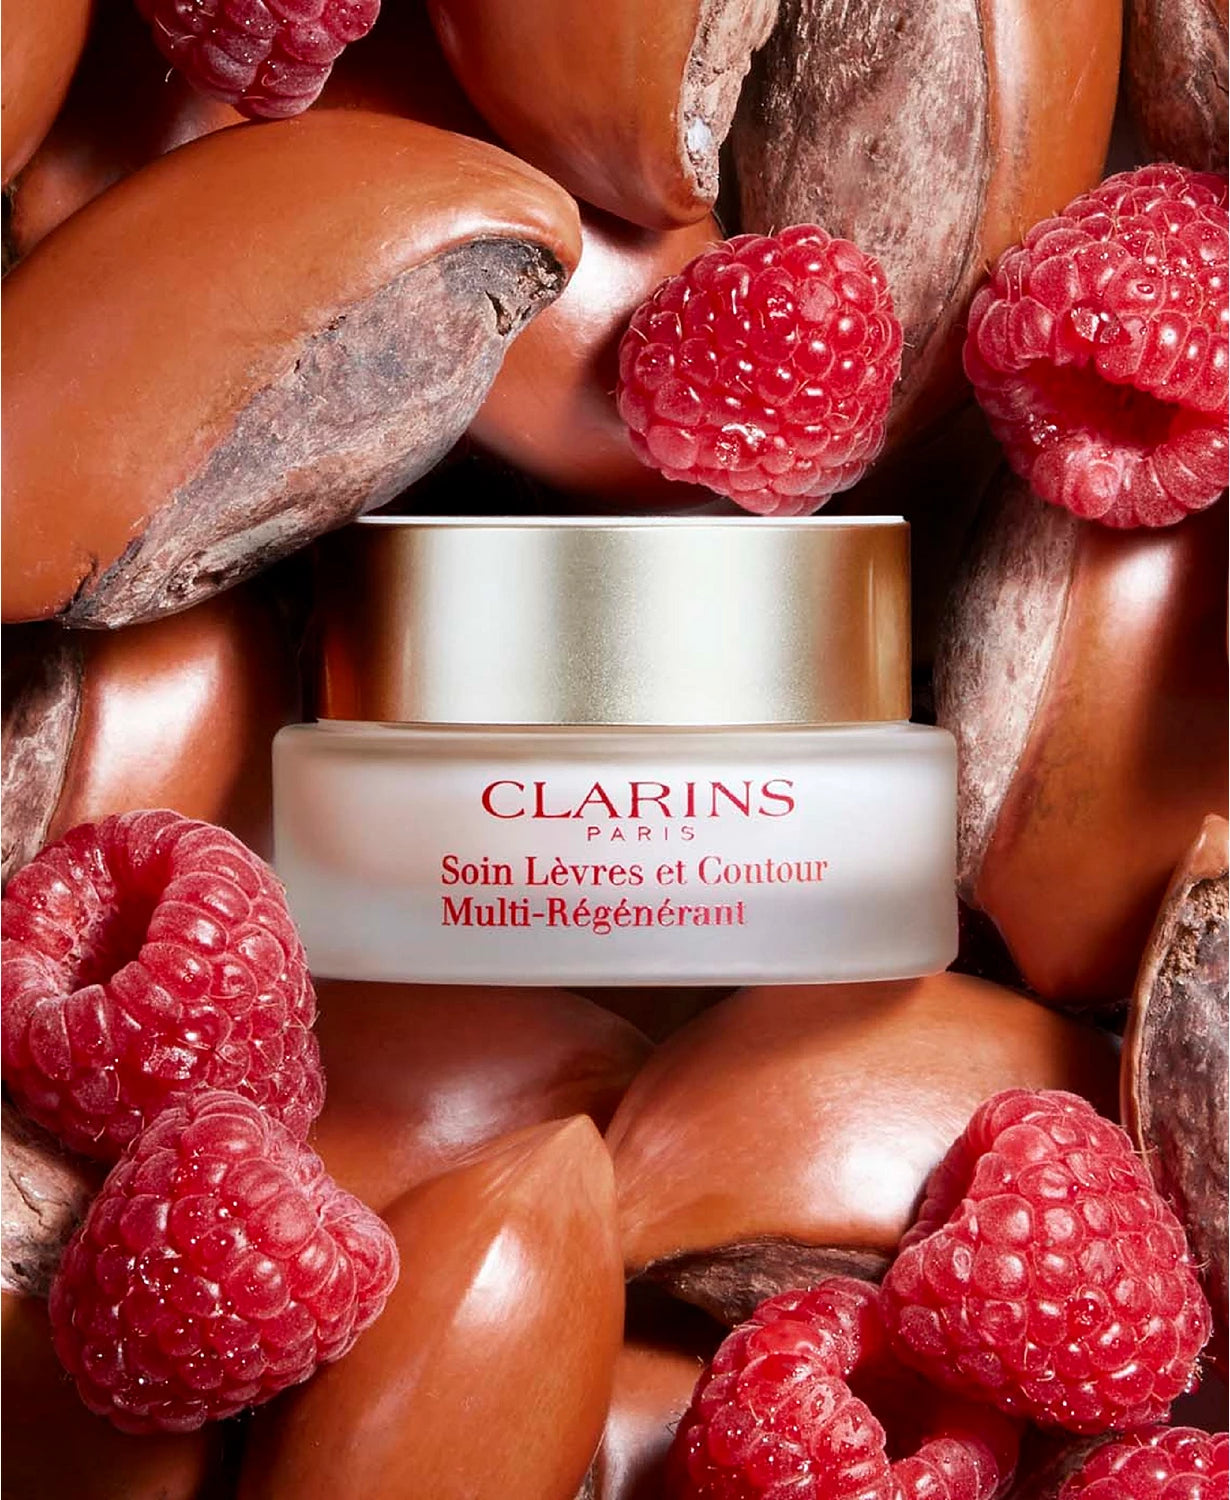 Clarins Extra-Firming Lip & Contour Balm